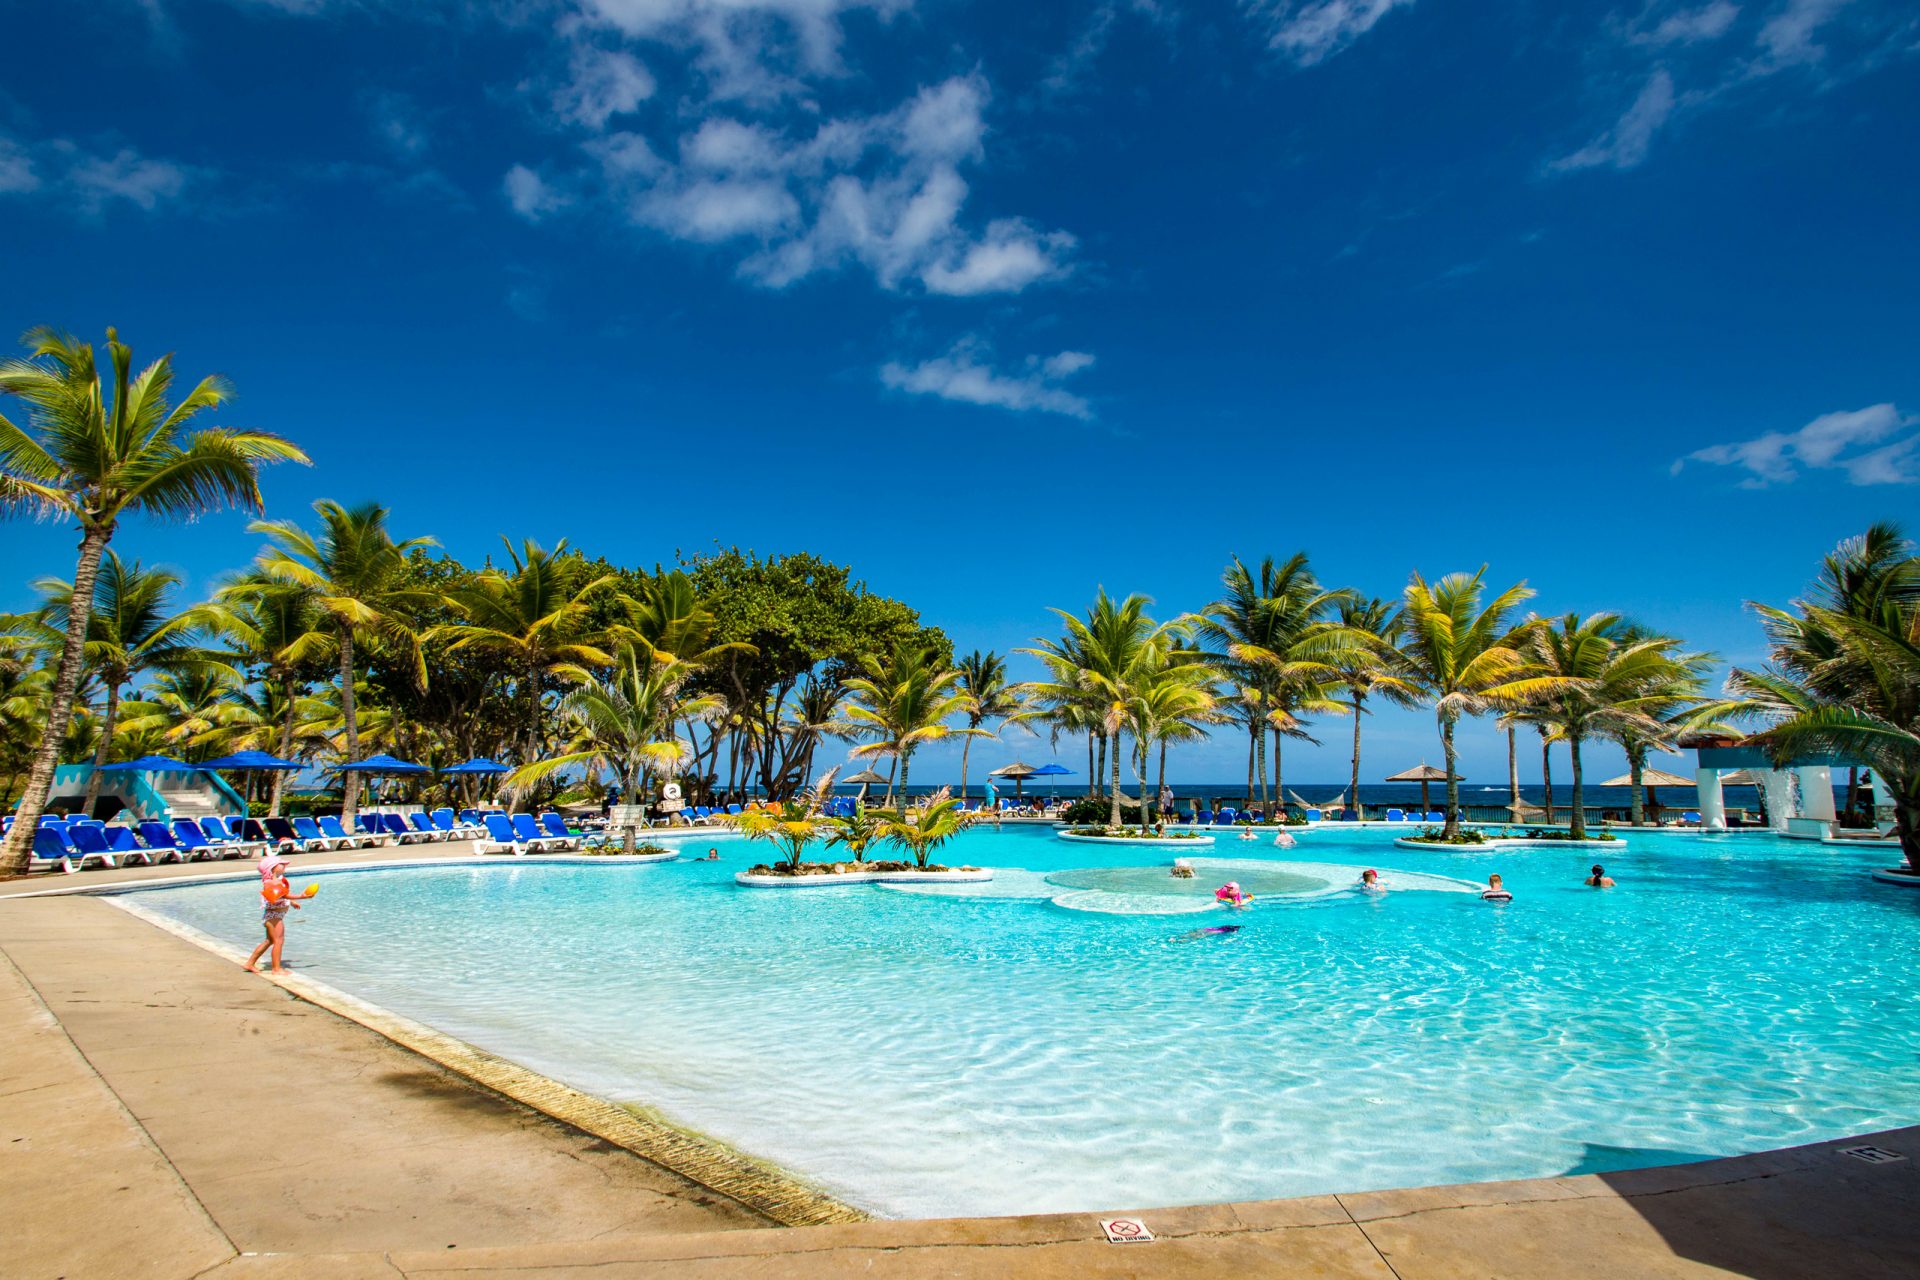 Pool at Coconut Bay Beach Resort and Spa; Courtesy of Coconut Bay Beach Resort and Spa